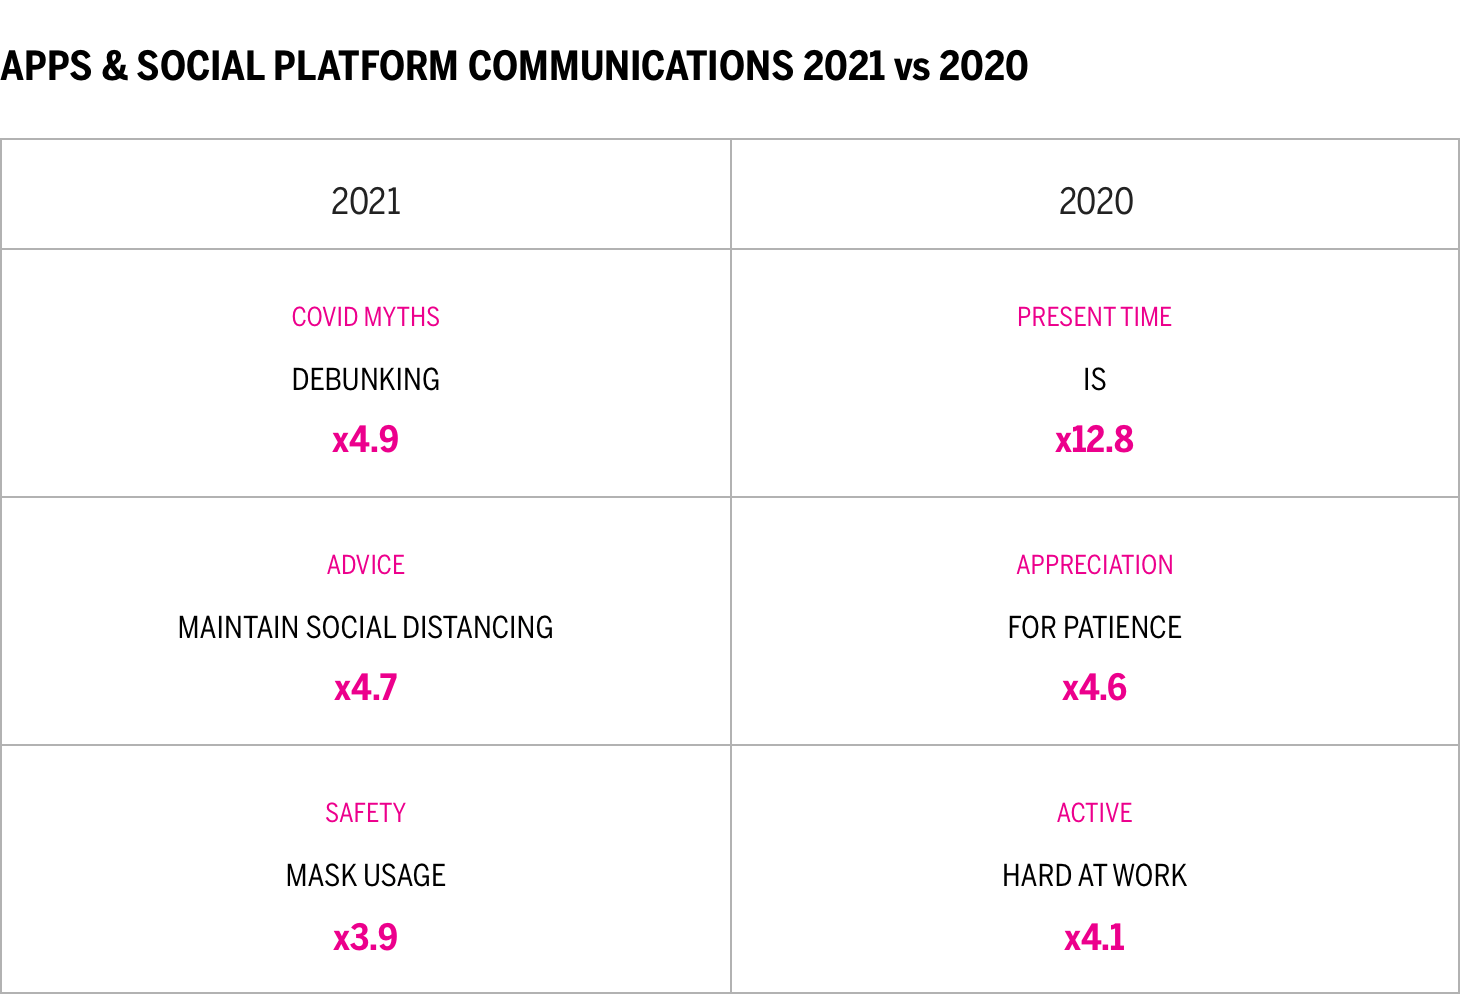 APPS & SOCIAL PLATFORM COMMUNICATIONS 2021 vs 2020 chart